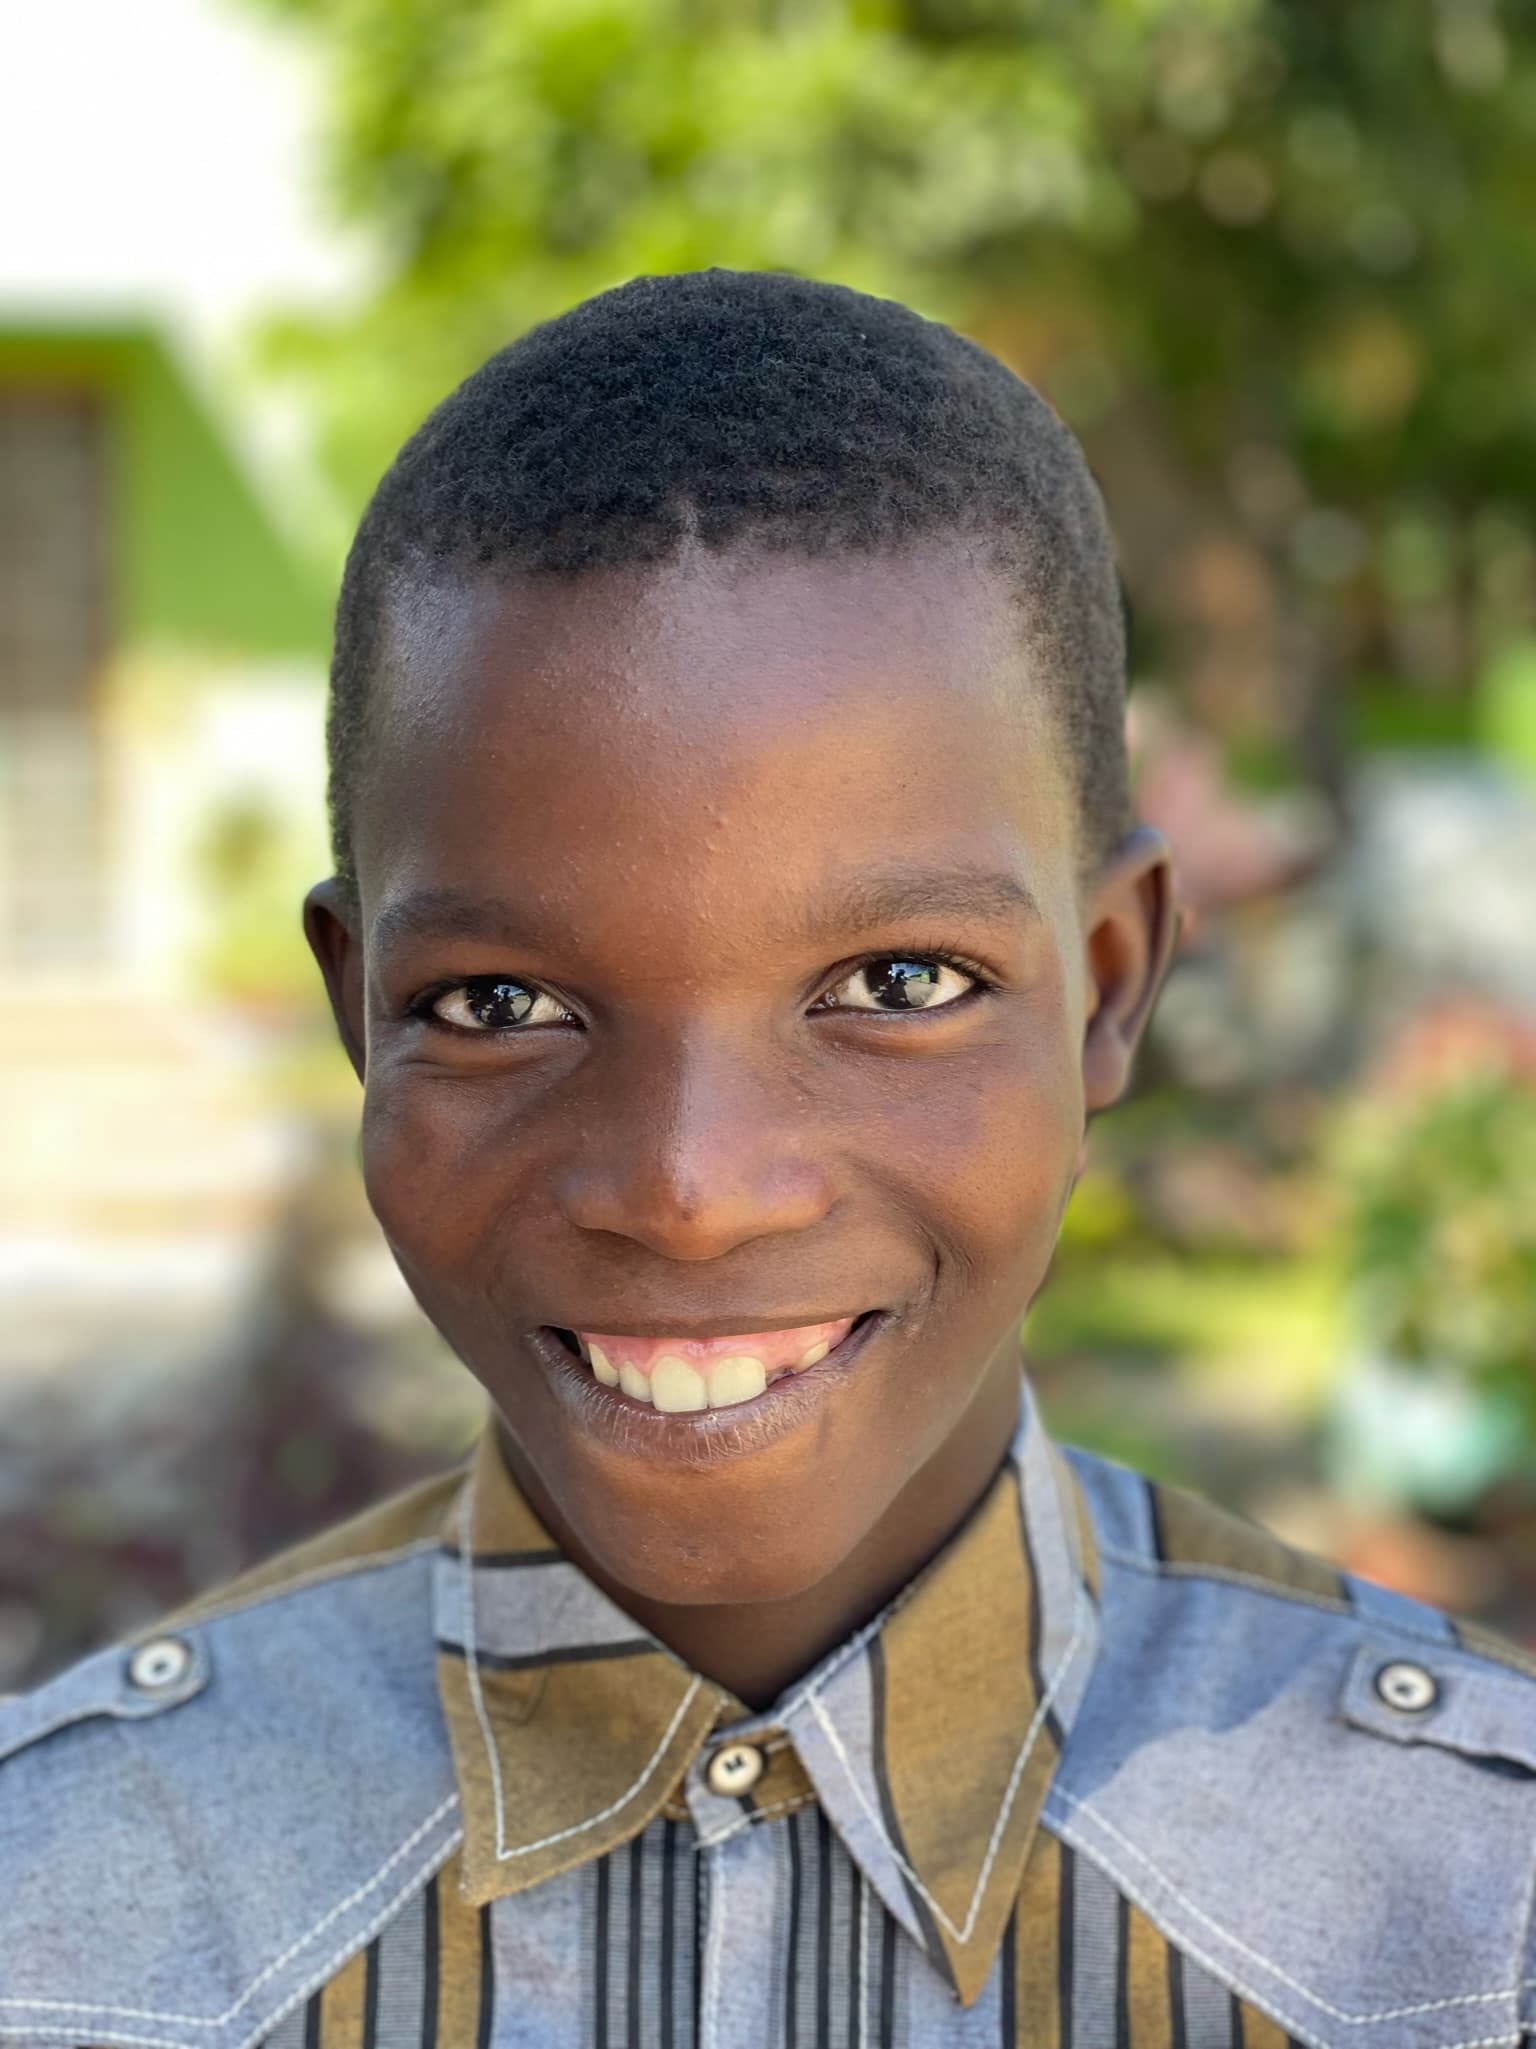 LIFE FOR MOZAMBIQUE SPONSOR CHILD